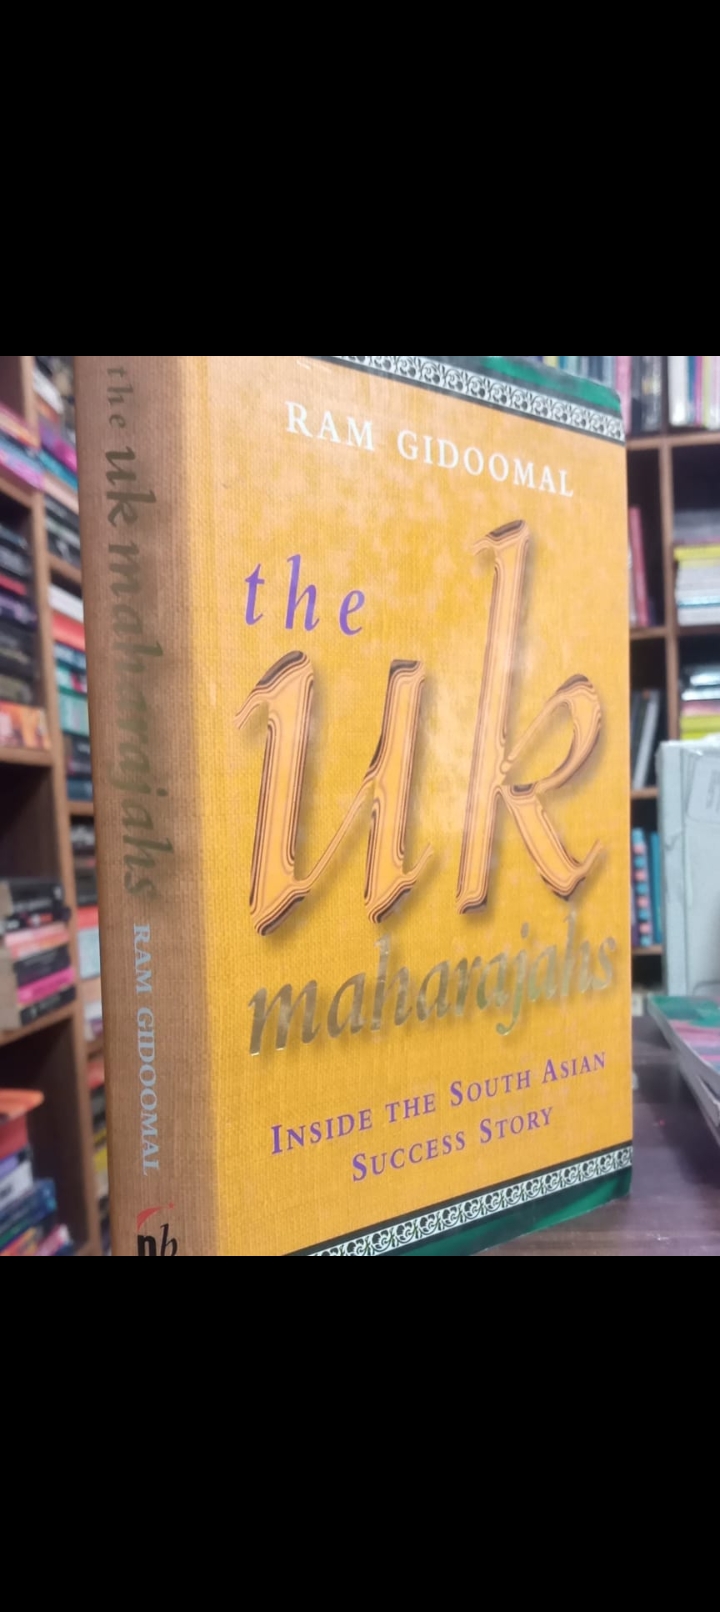 the uk maharajahs.... original hardcover